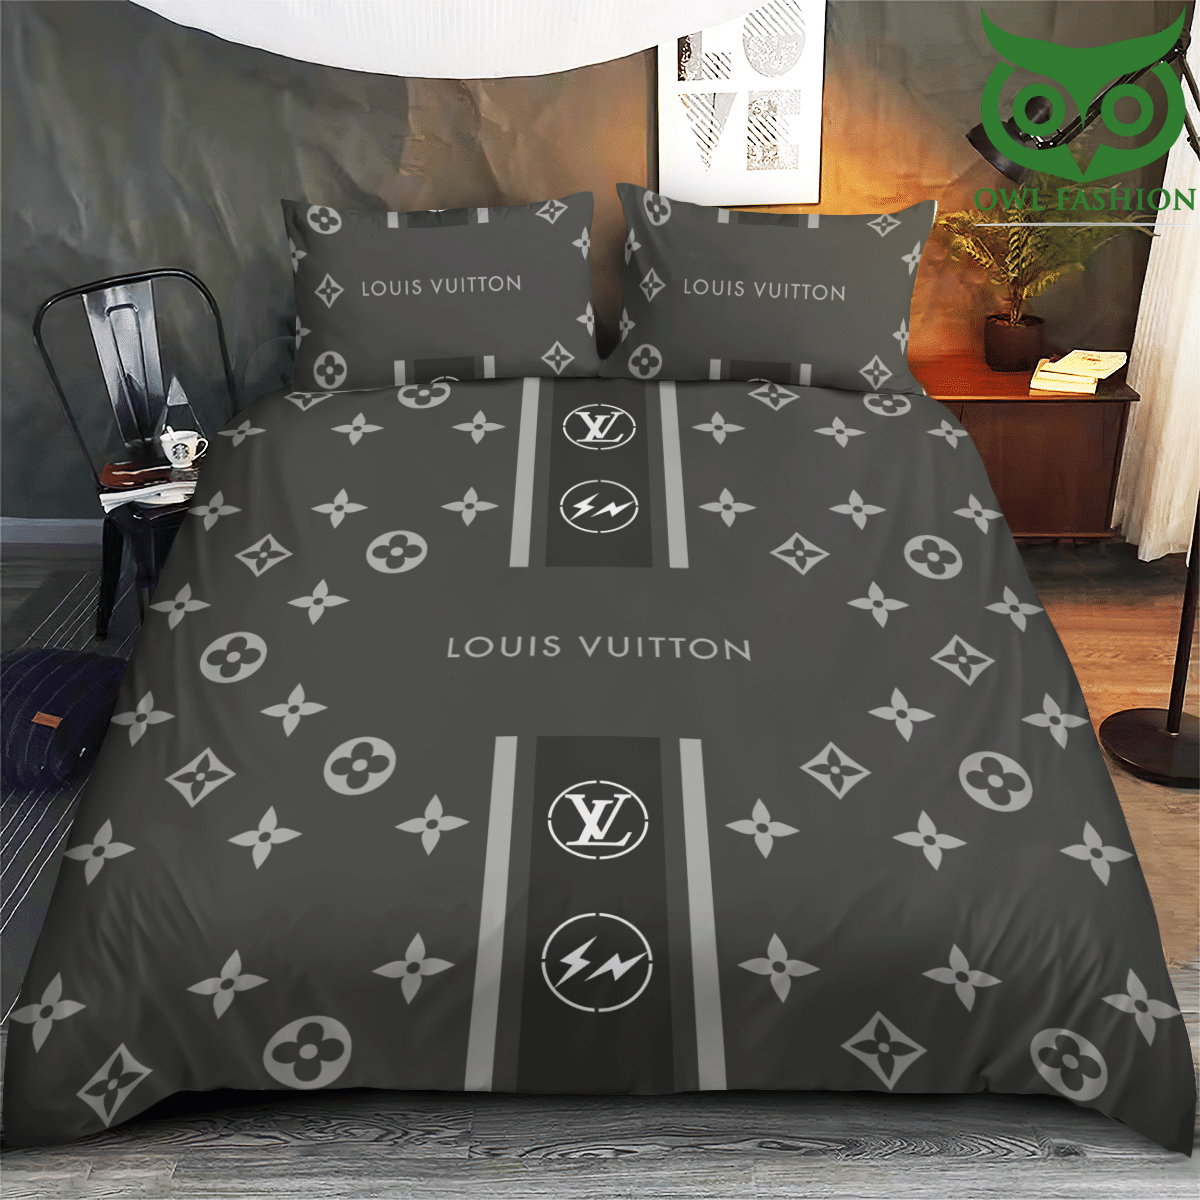 Louis Vuitton grey logo bedding set